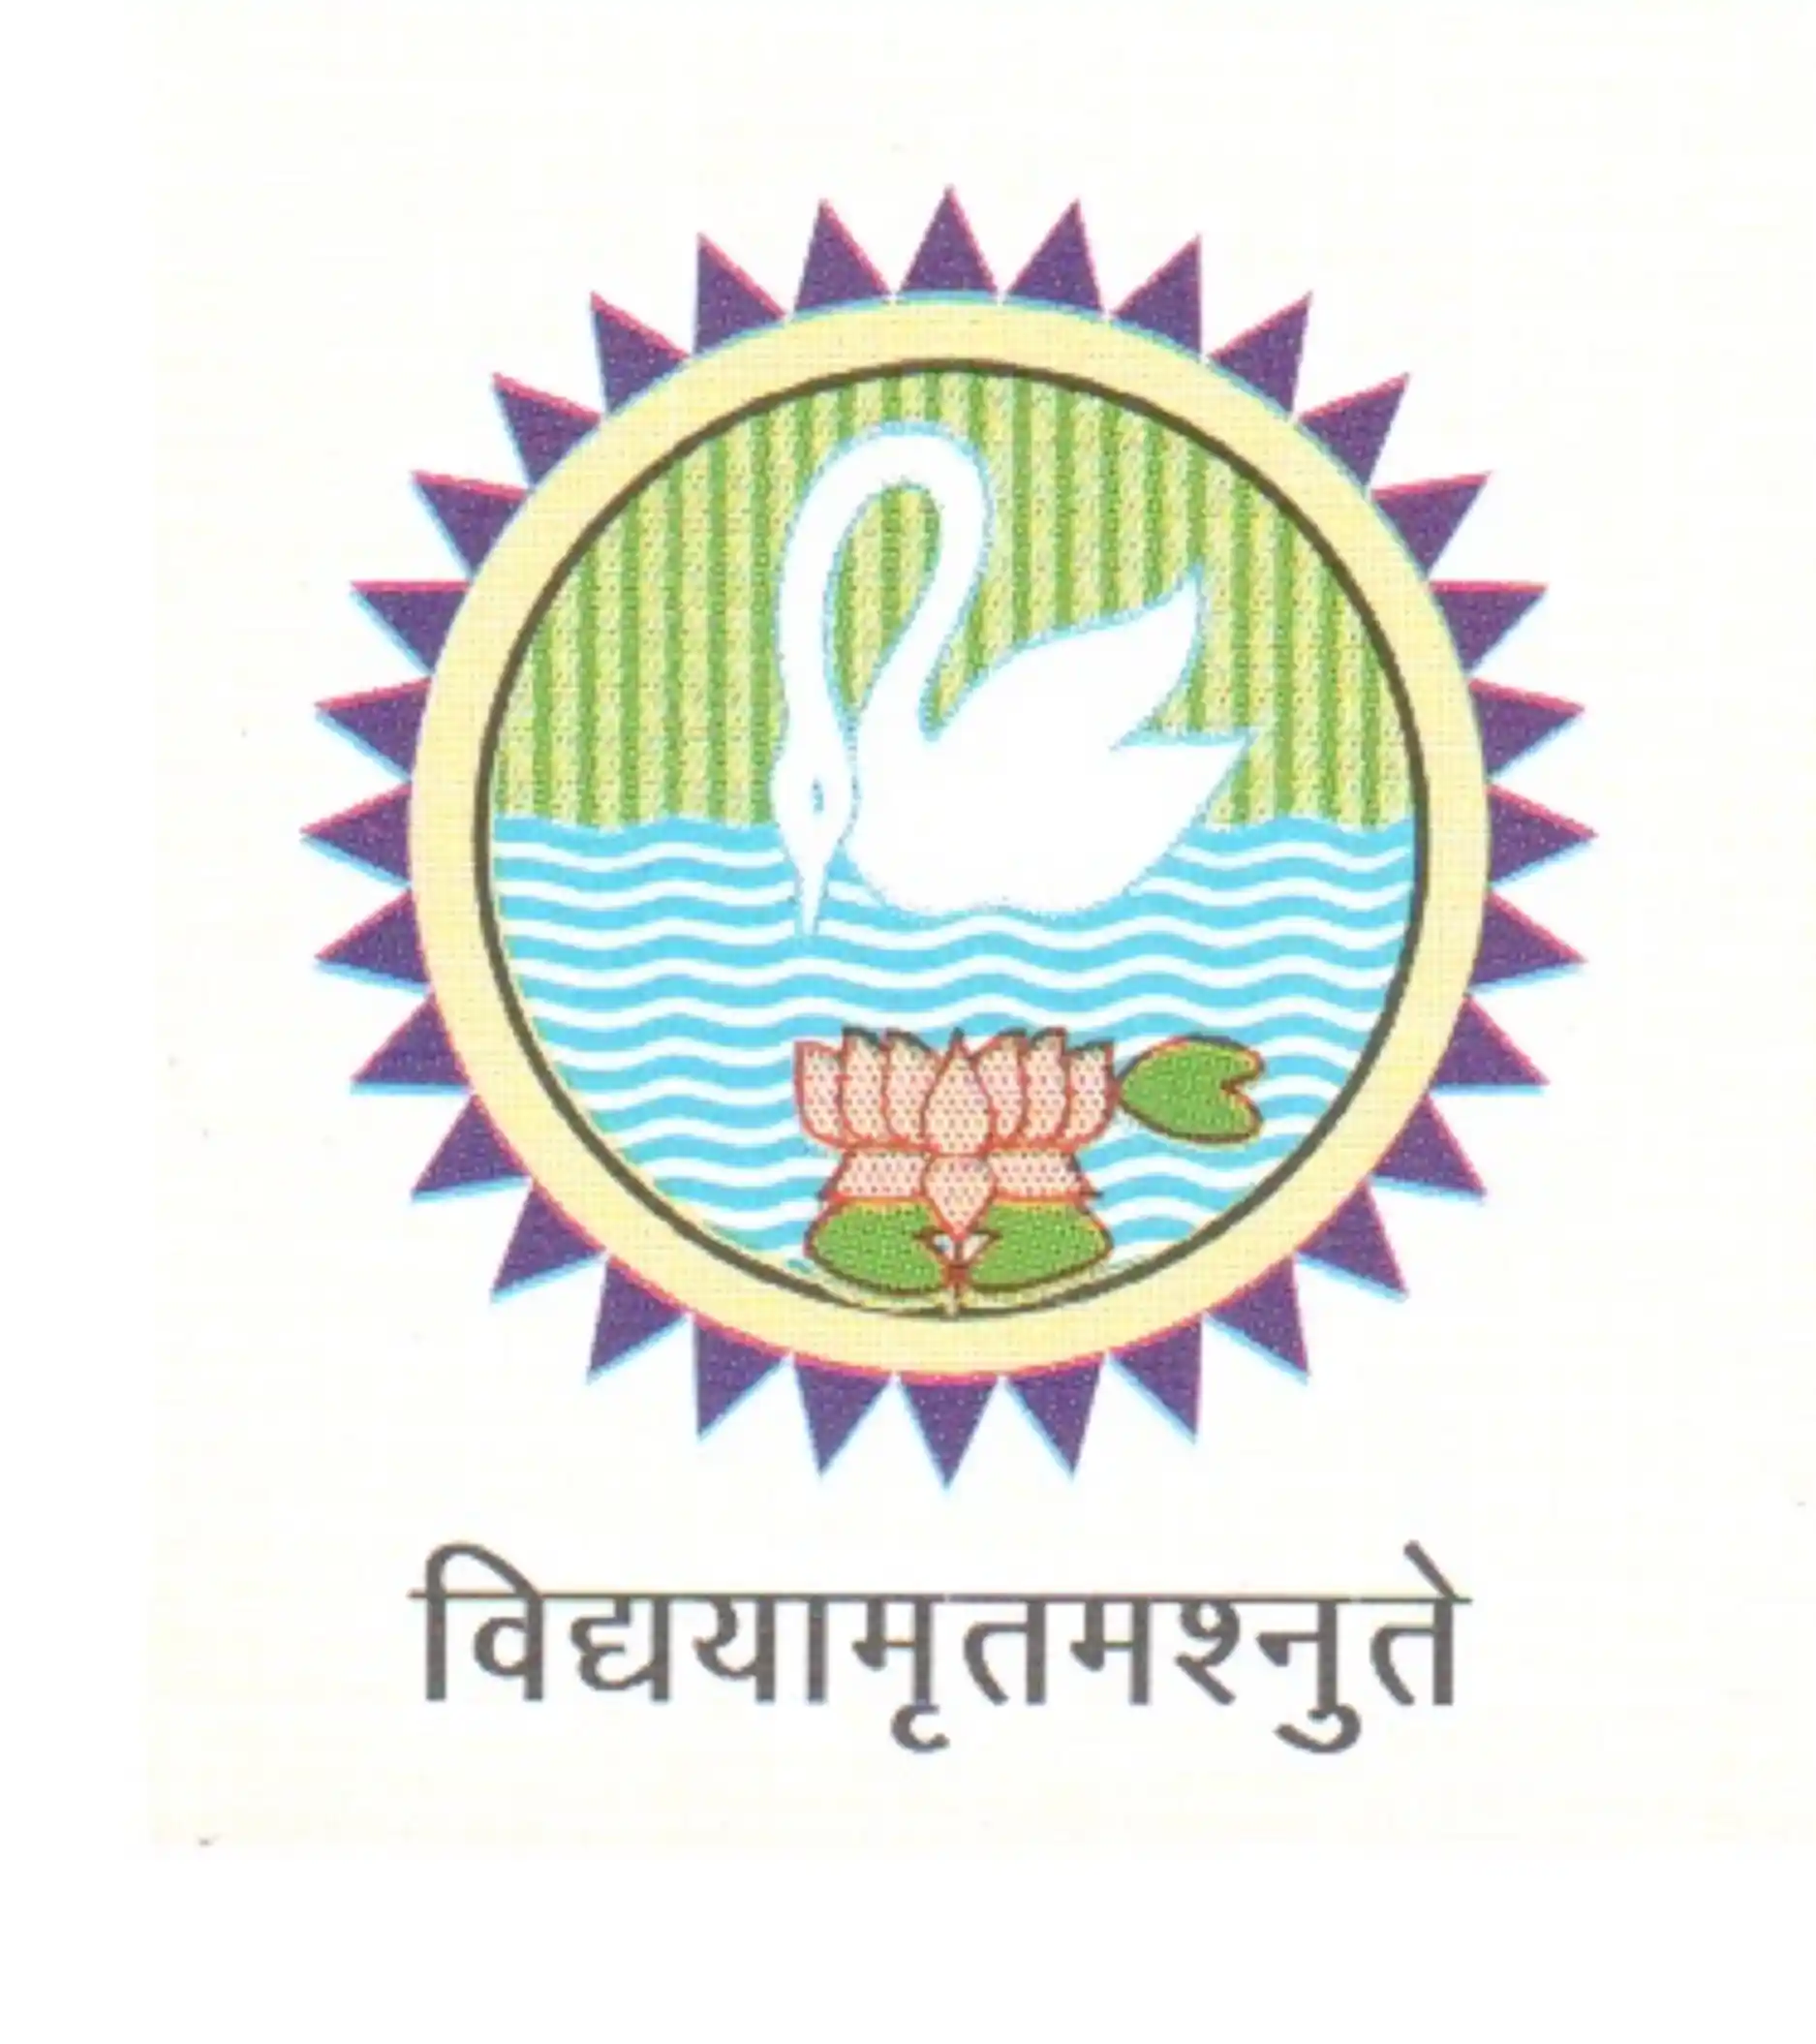 SD College of Engineering and Technology [SDCET] Muzaffarnagar logo